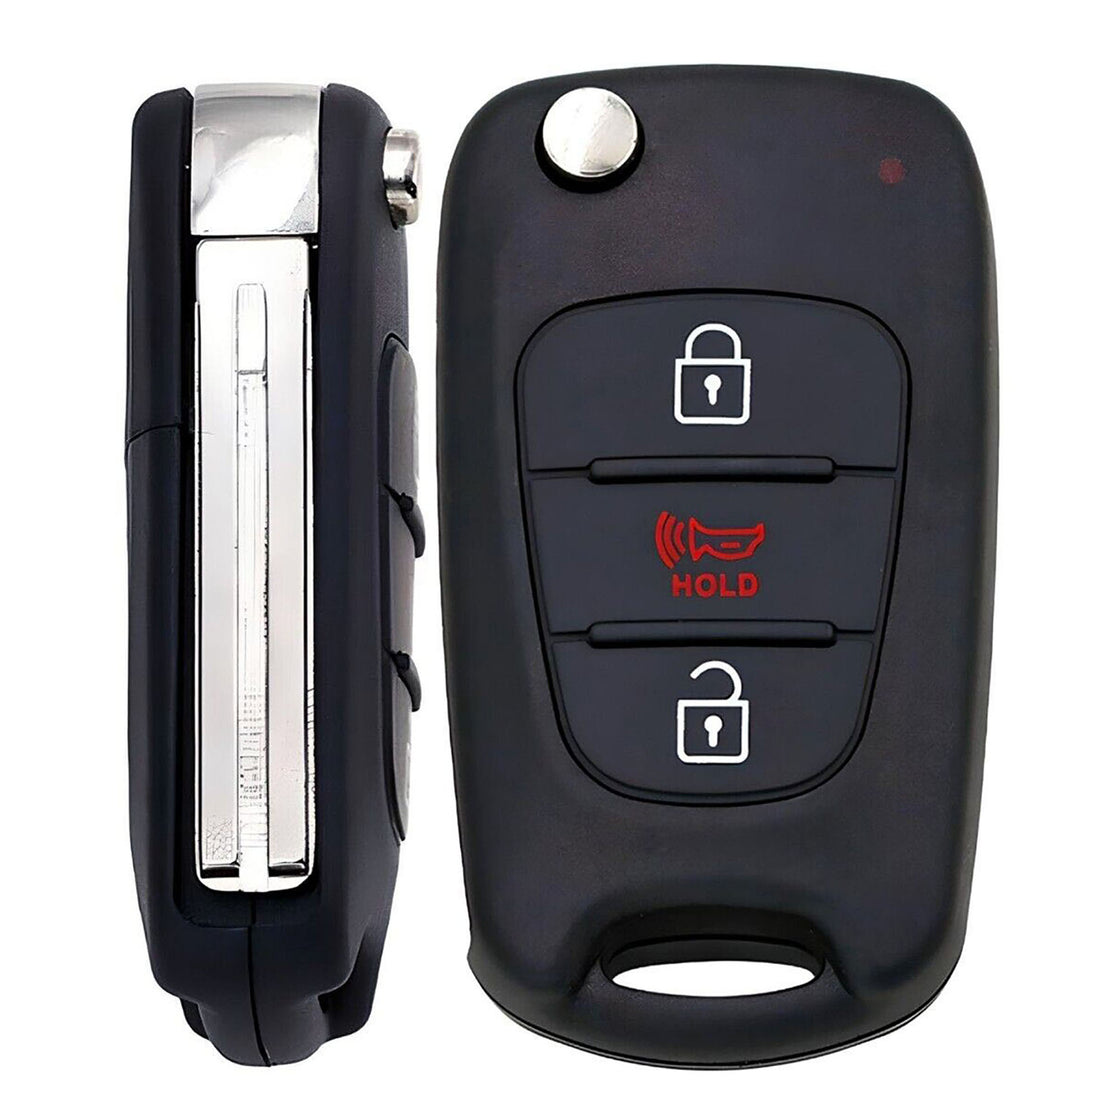 1x New Replacement Key Fob Remote Compatible with & Fit For 2012-2013 Kia Rio. TQ8-RKE-3F02 - MPN TQ8-RKE-3F02-02